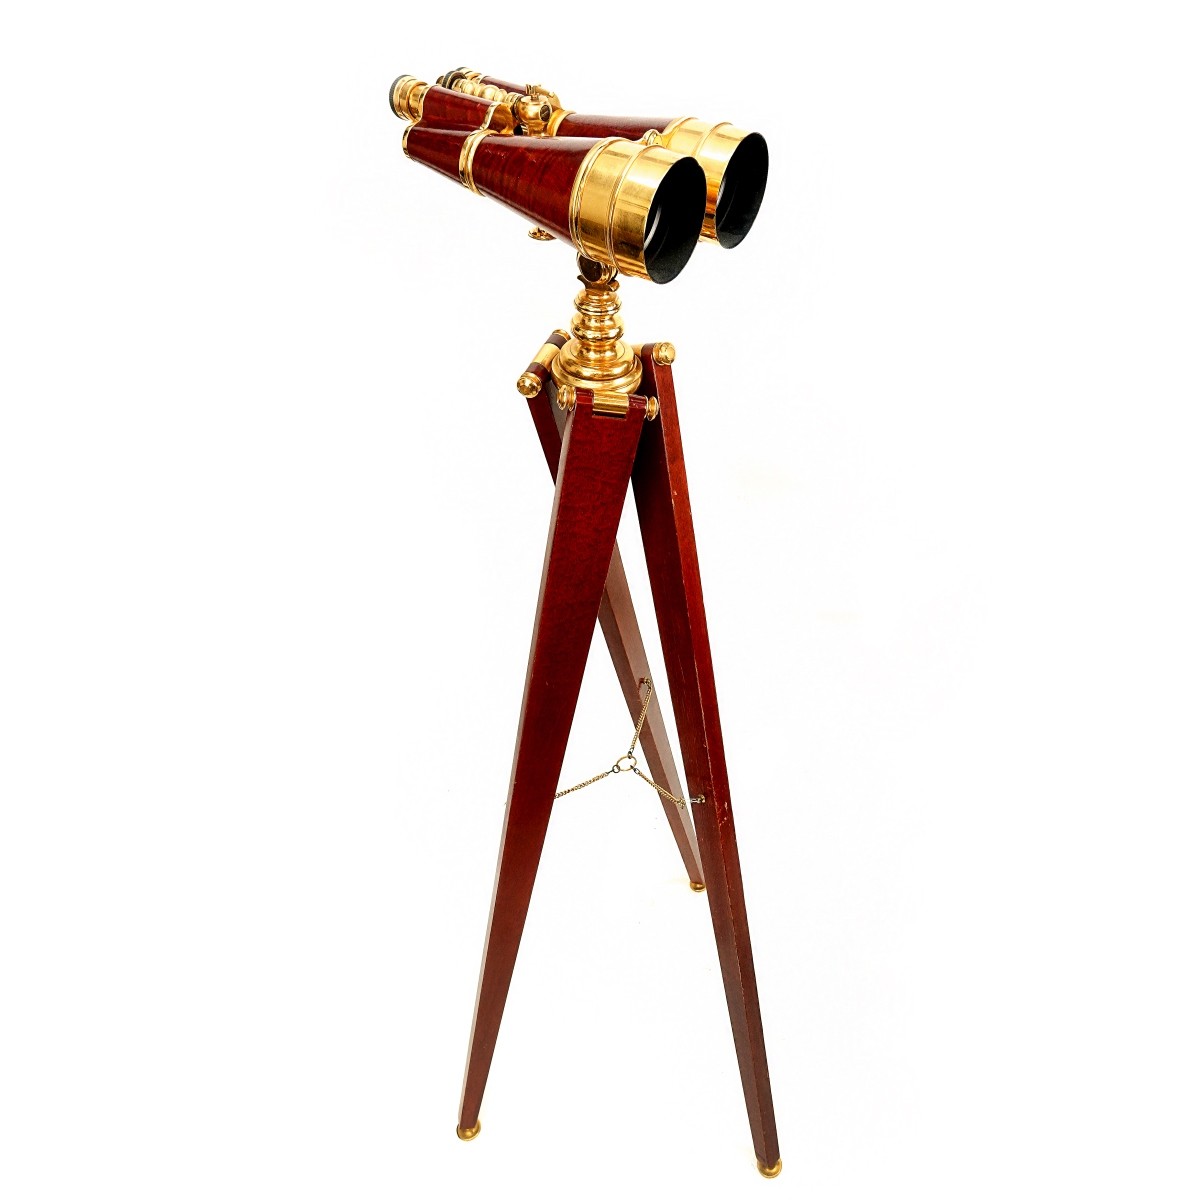 Modern Telescope on Wooden Stand